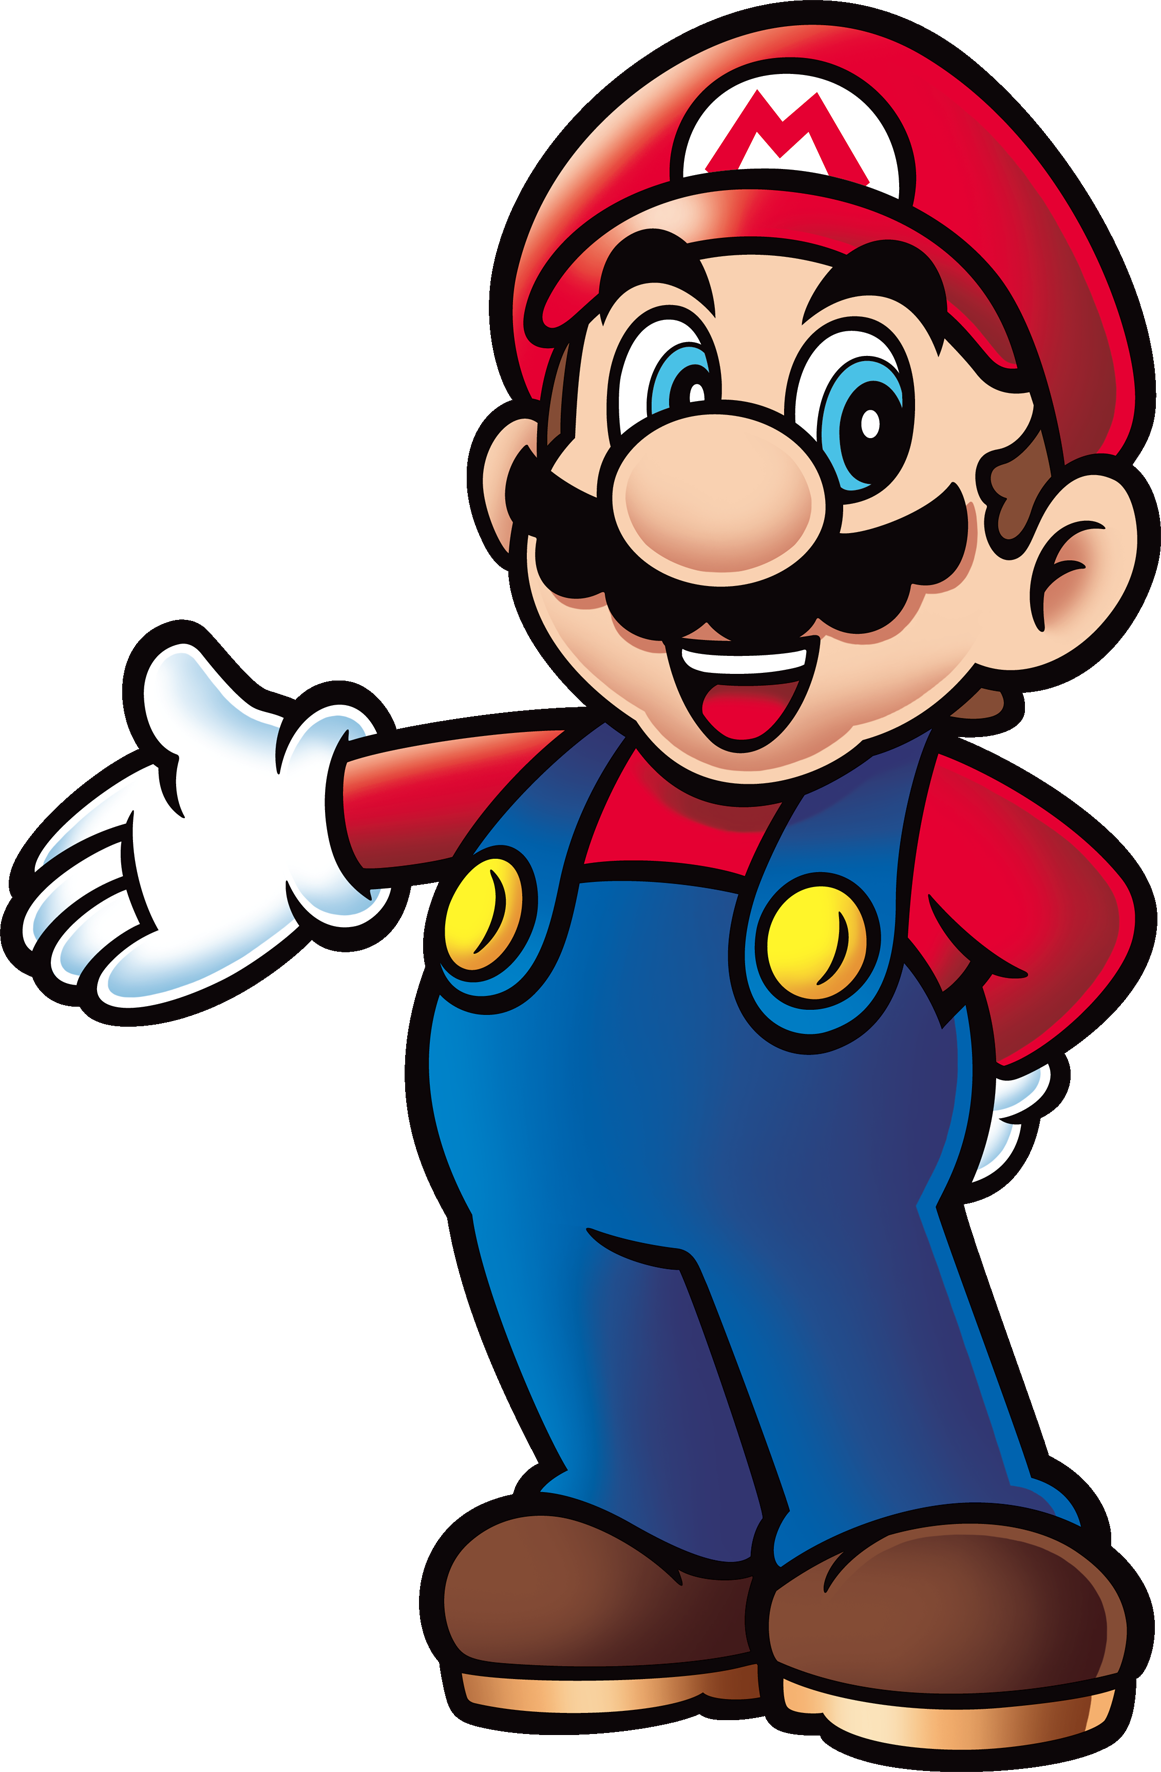 Mario File PNG Image